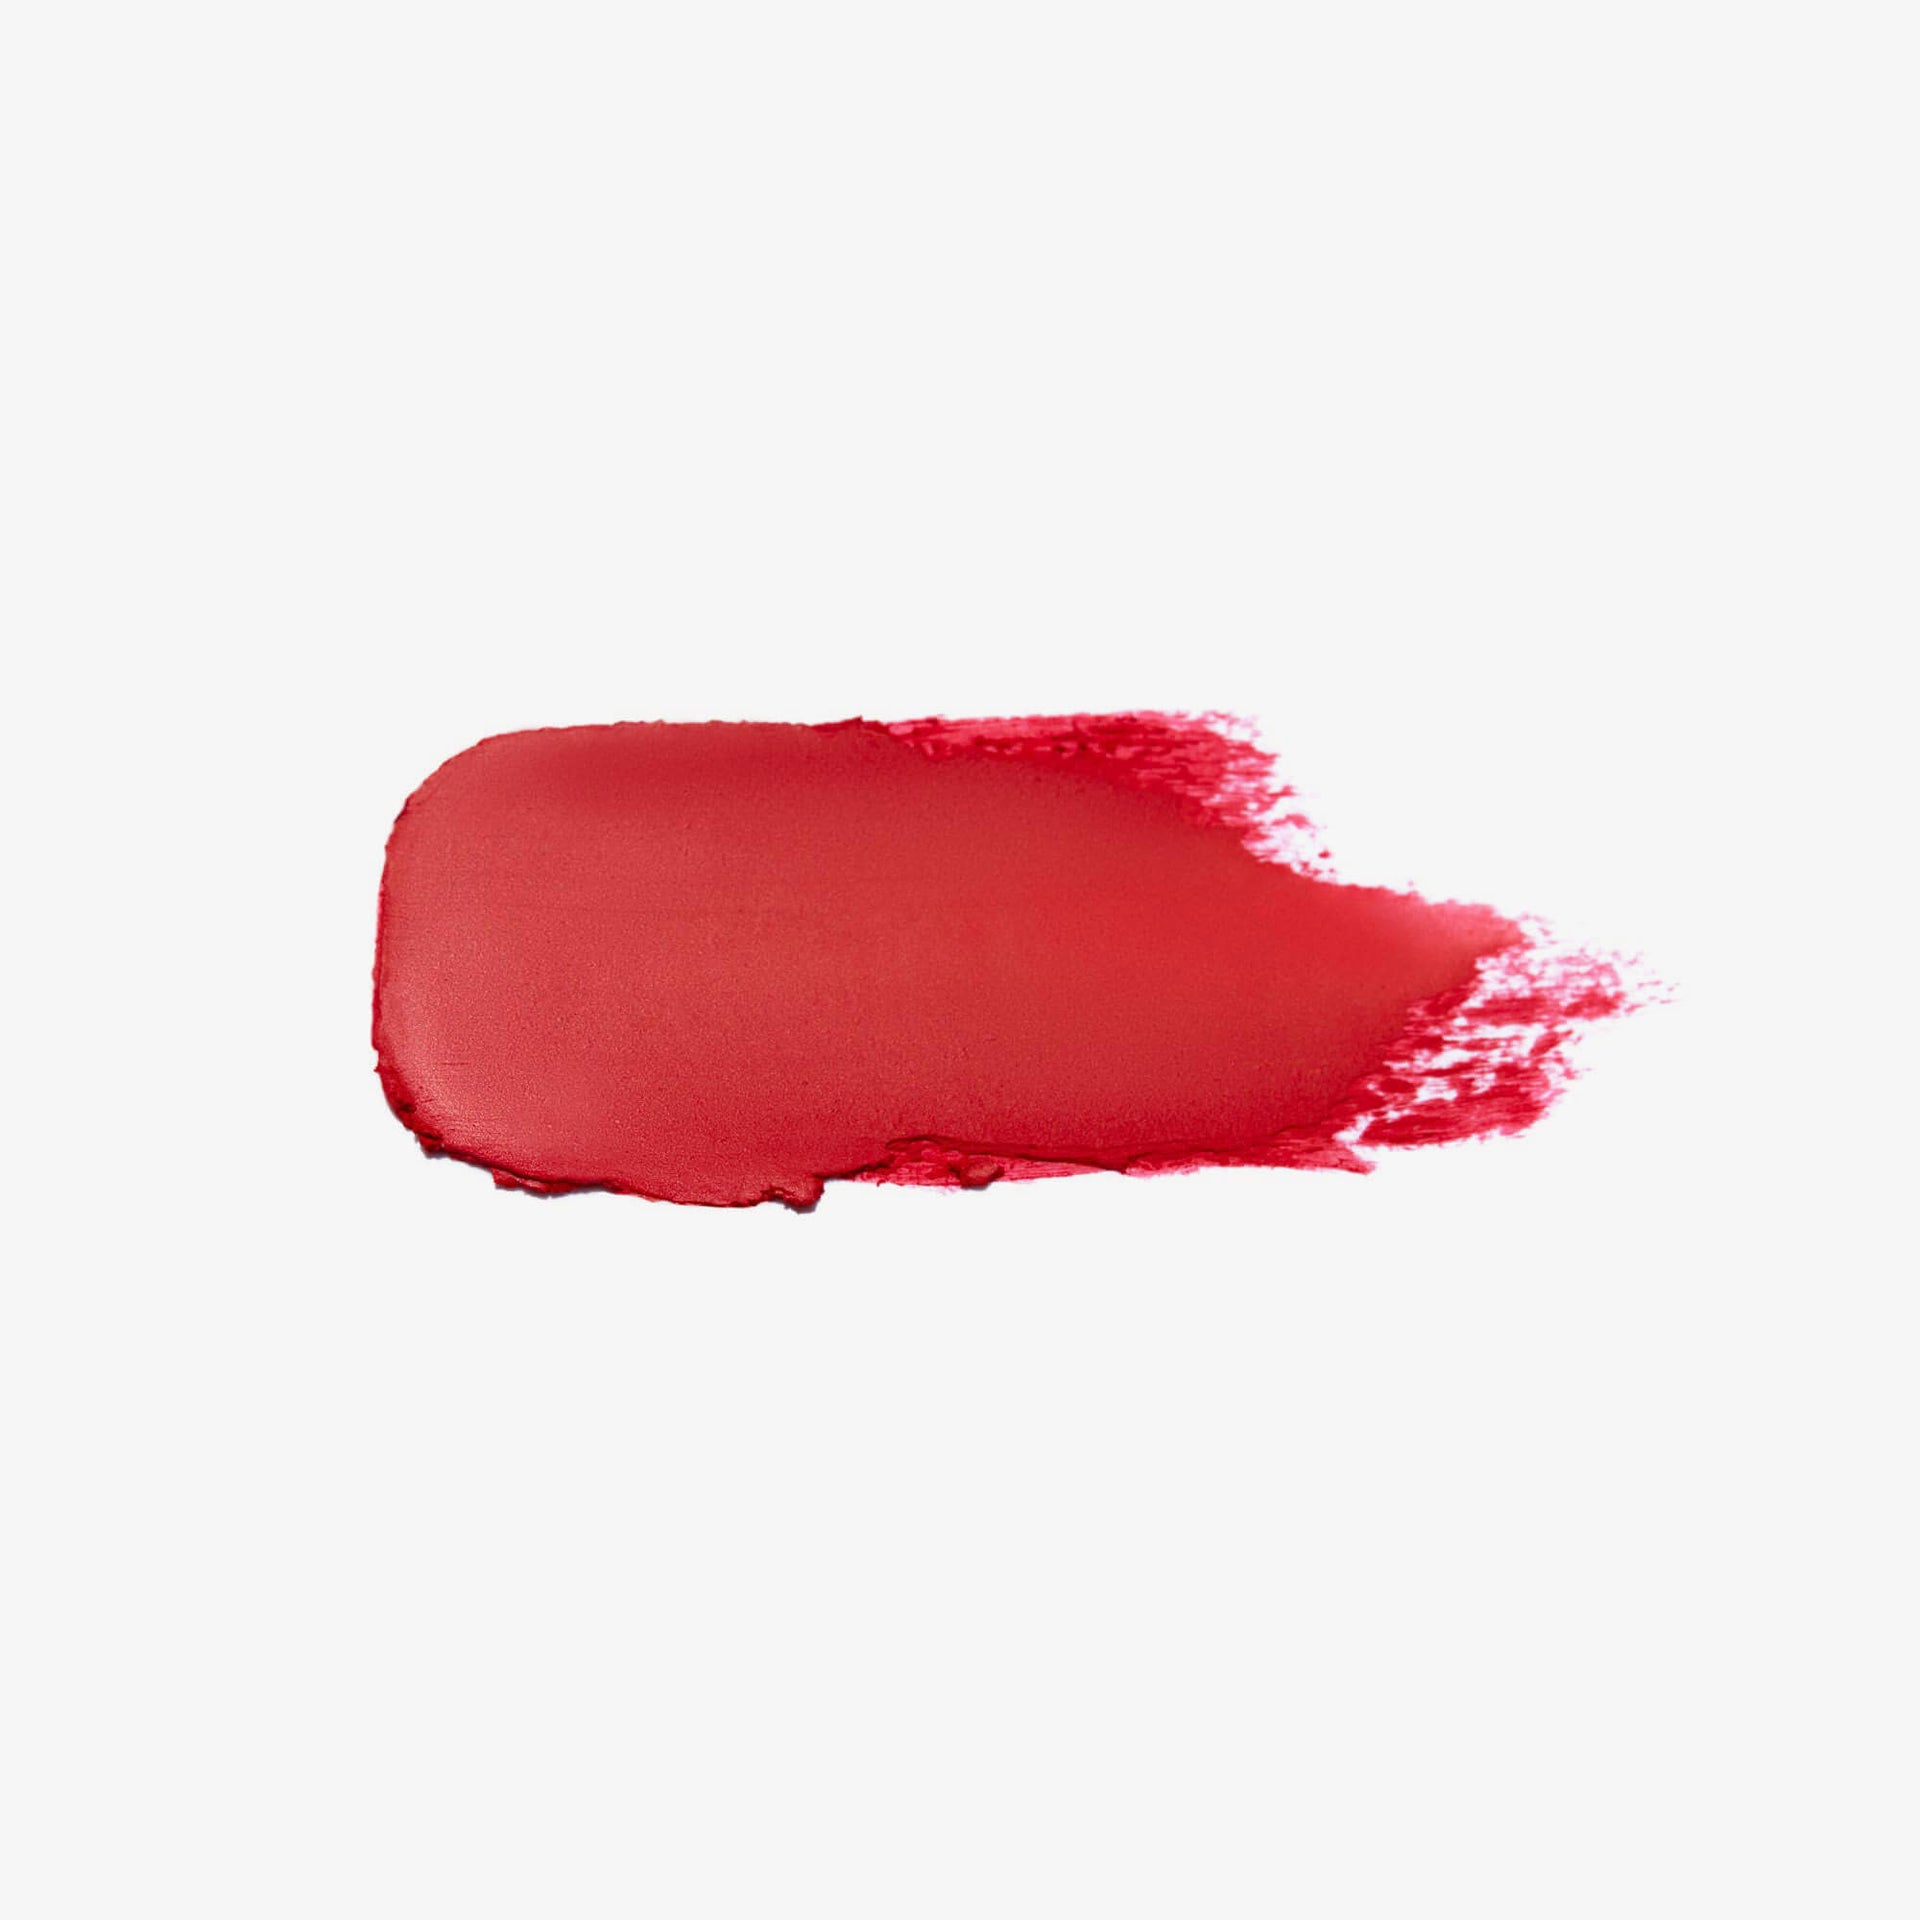 Cherry |Limited Edition Satin Lipstick Swatch Shade Cherry